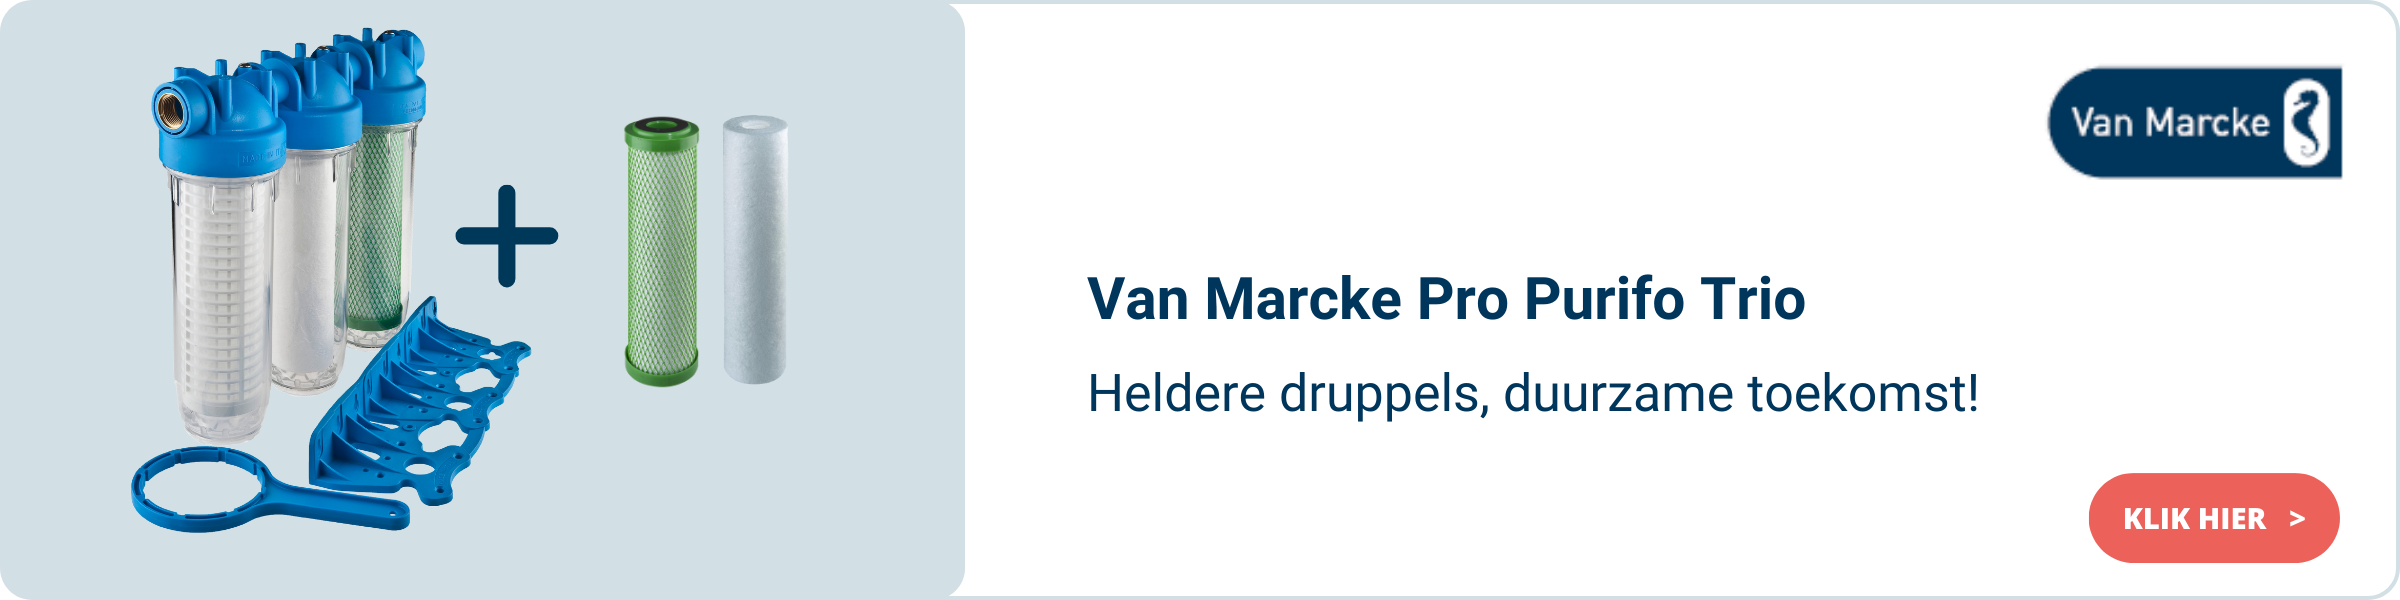 Van Marcke Pro Purifo Trio - NL.png